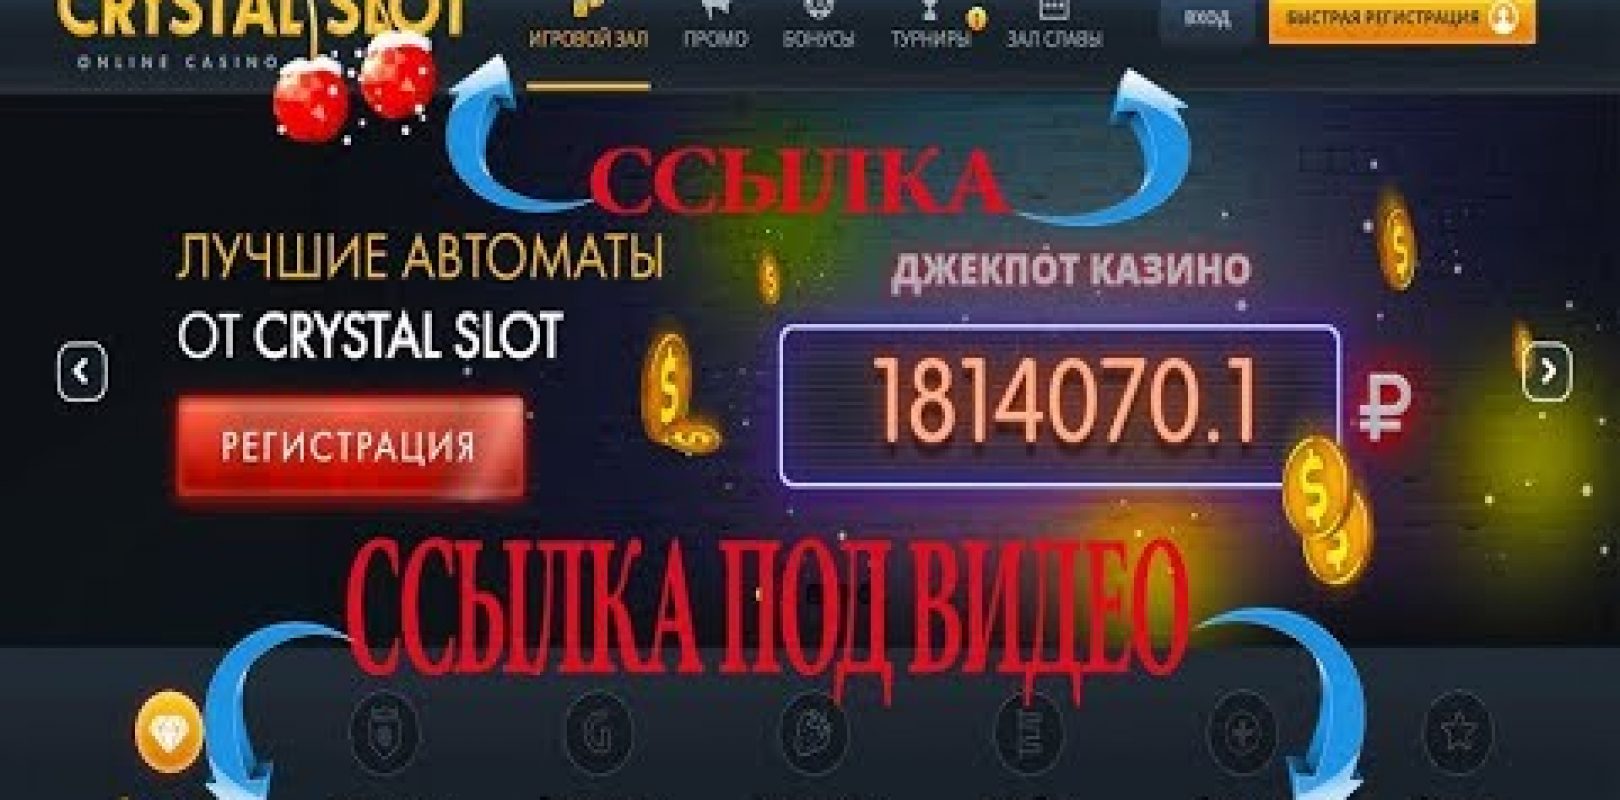 Hard rock casino online bônus code